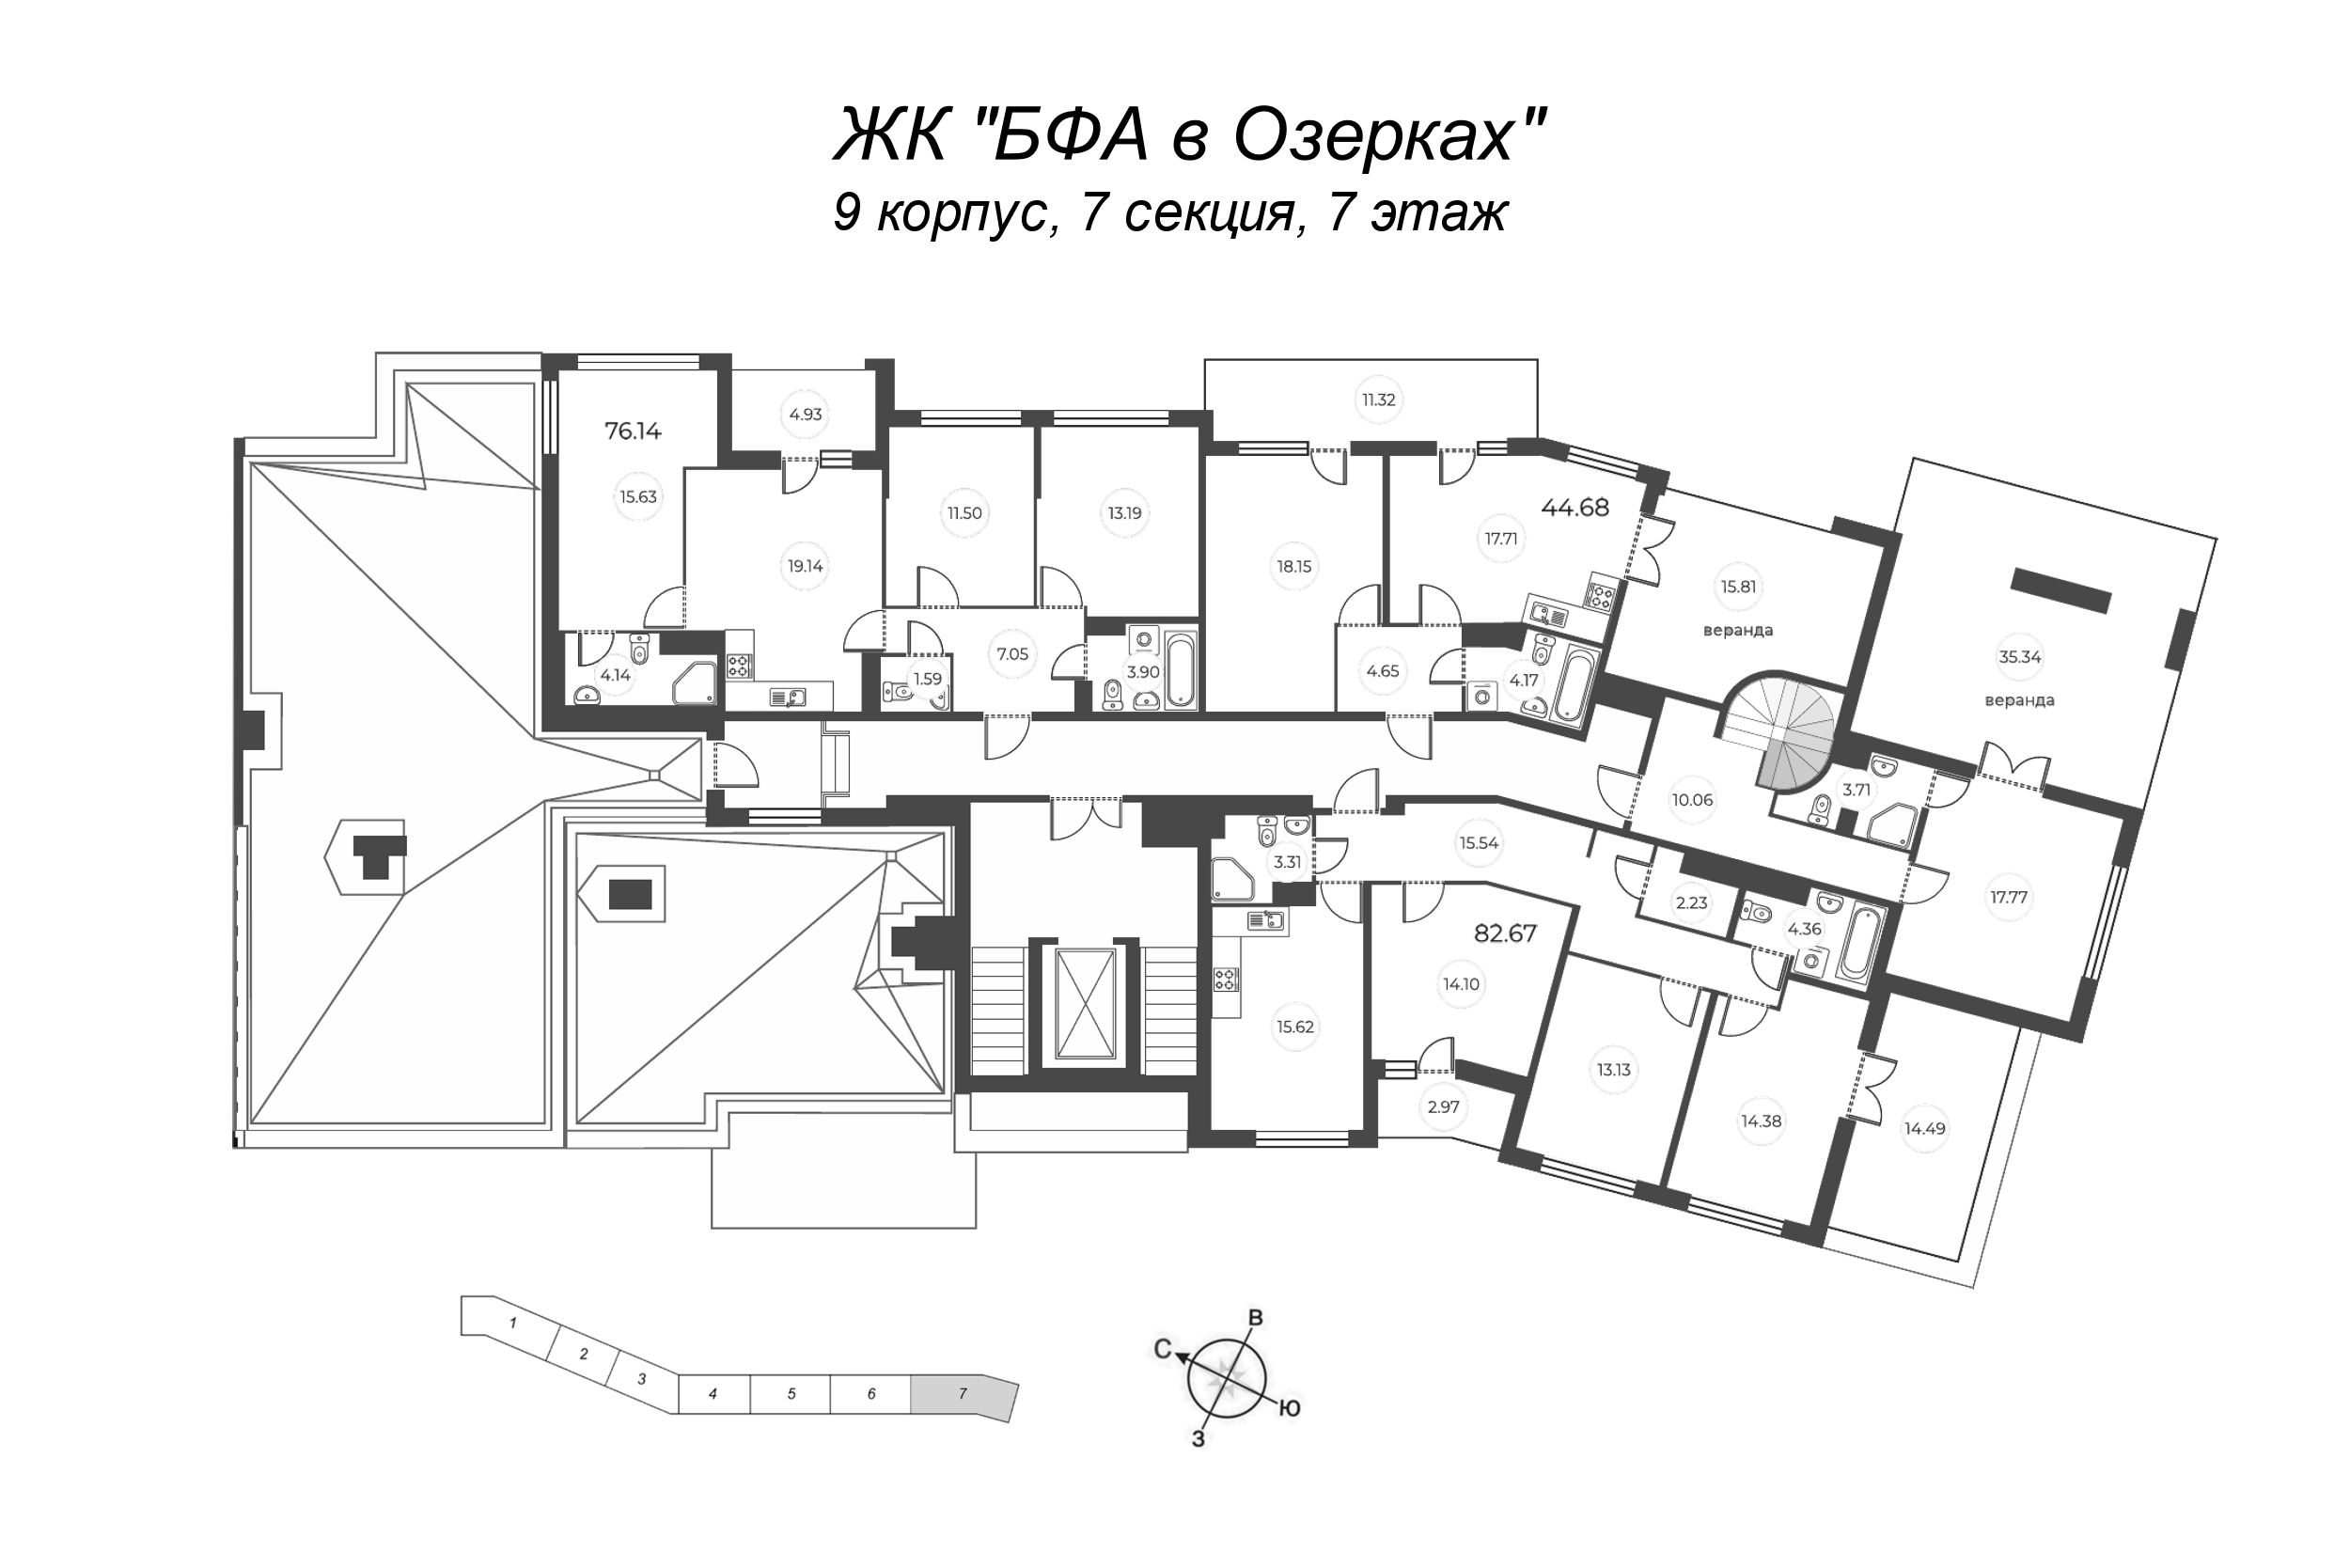 4-комнатная (Евро) квартира, 88.51 м² - планировка этажа